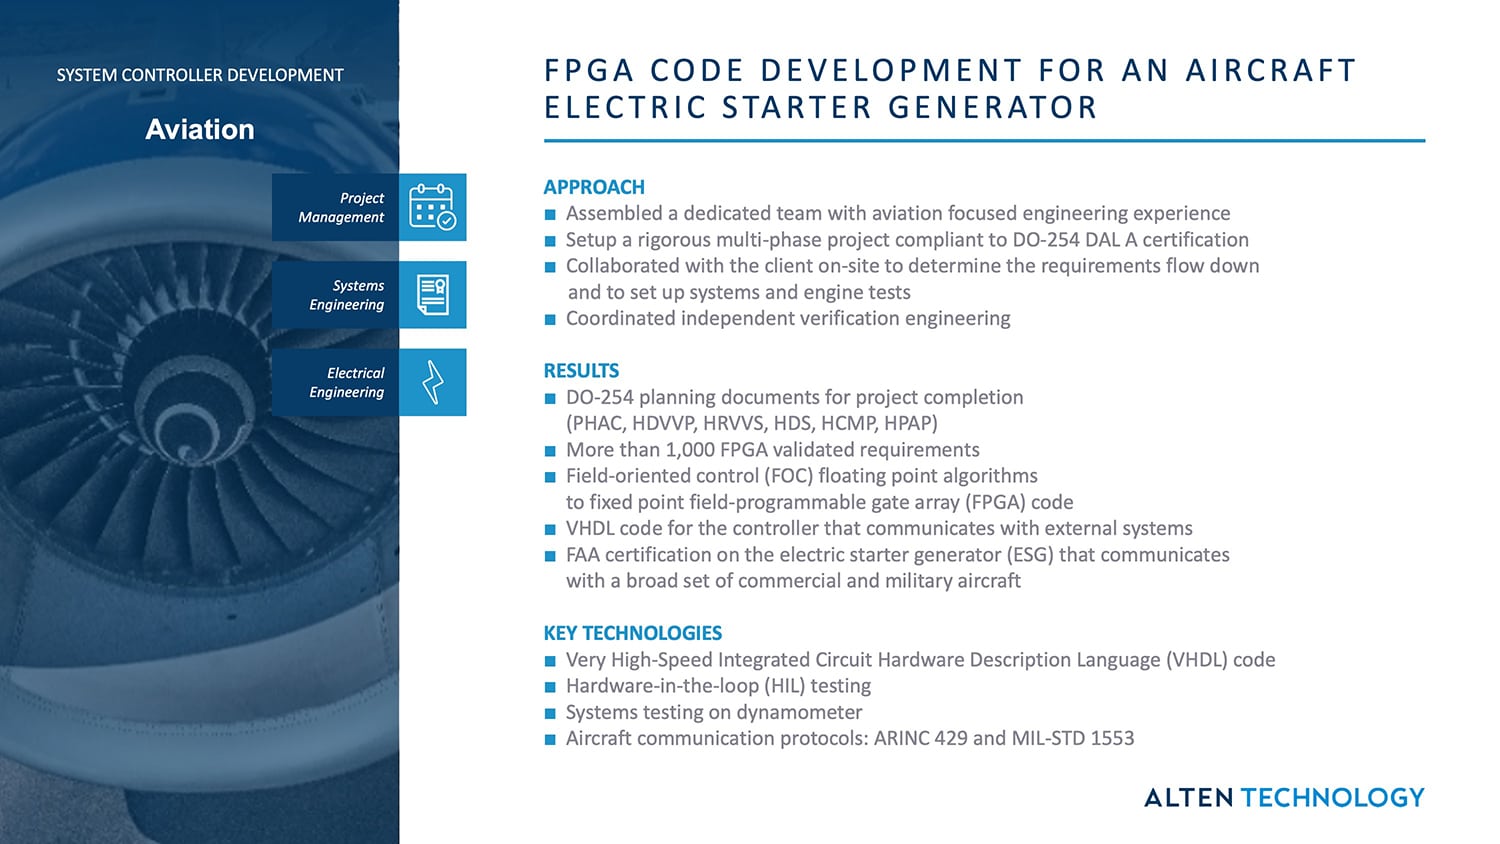 FPGA Code Development for an Aircraft Electric Starter Generator